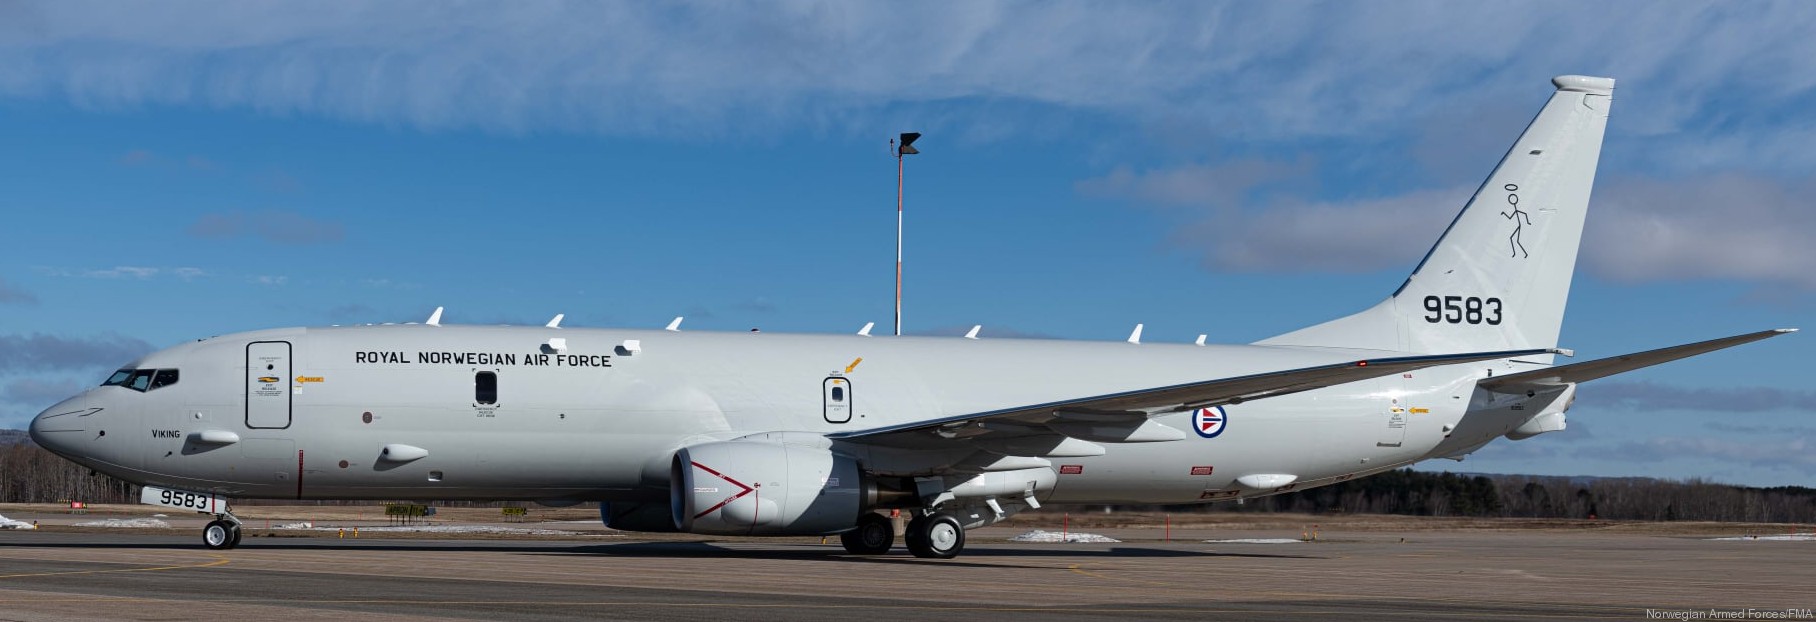 p-8a poseidon maritime patrol aircraft royal norwegian air force luftforsvaret 9583 viking 11